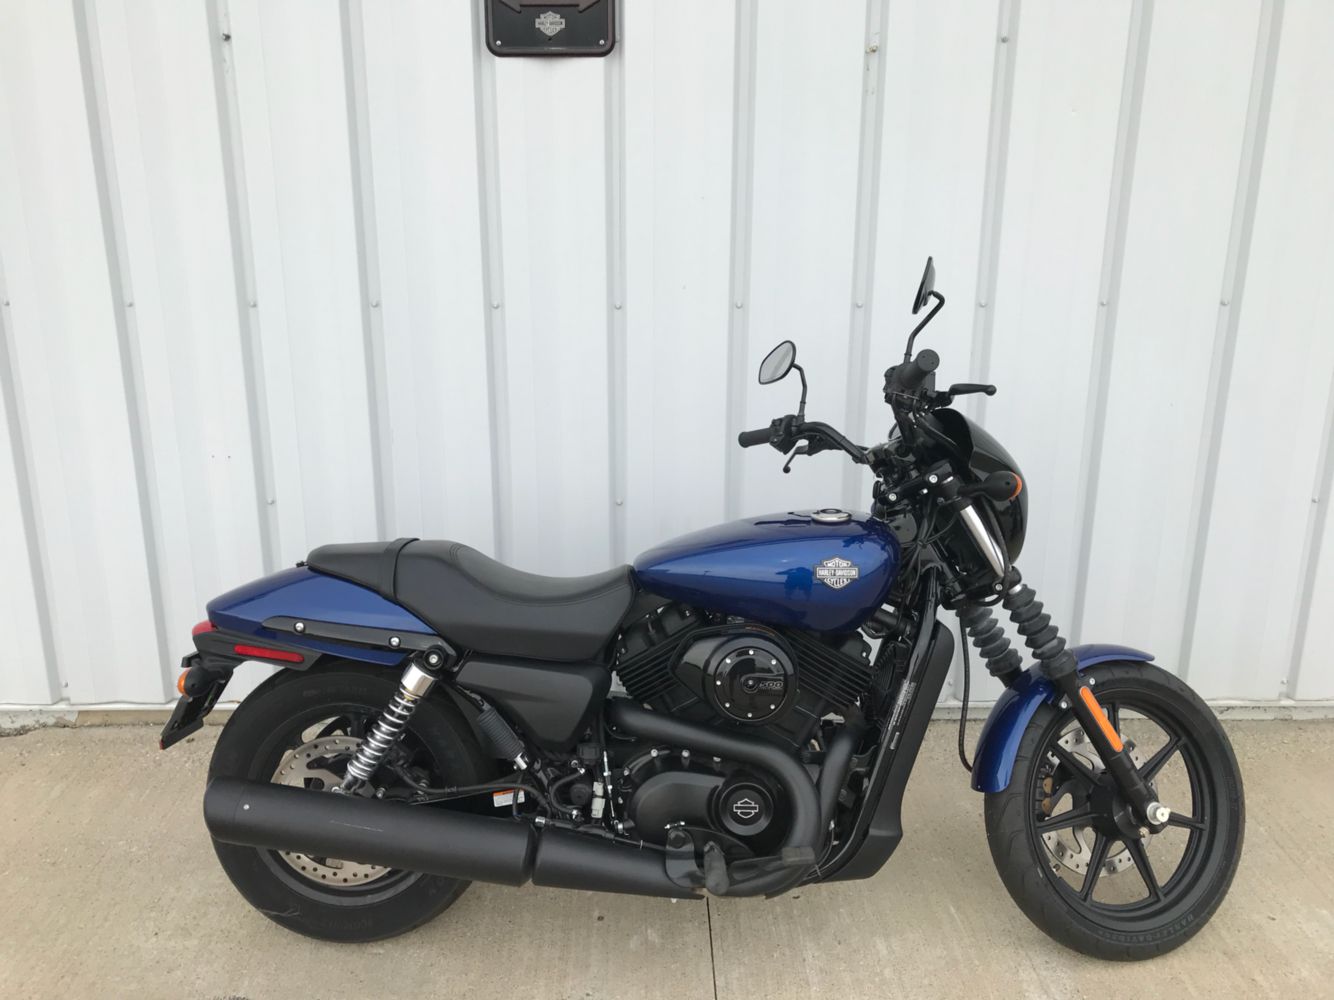 New 2016 Harley Davidson Street 500 Superior Blue Motorcycles In Osceola Ia 500947